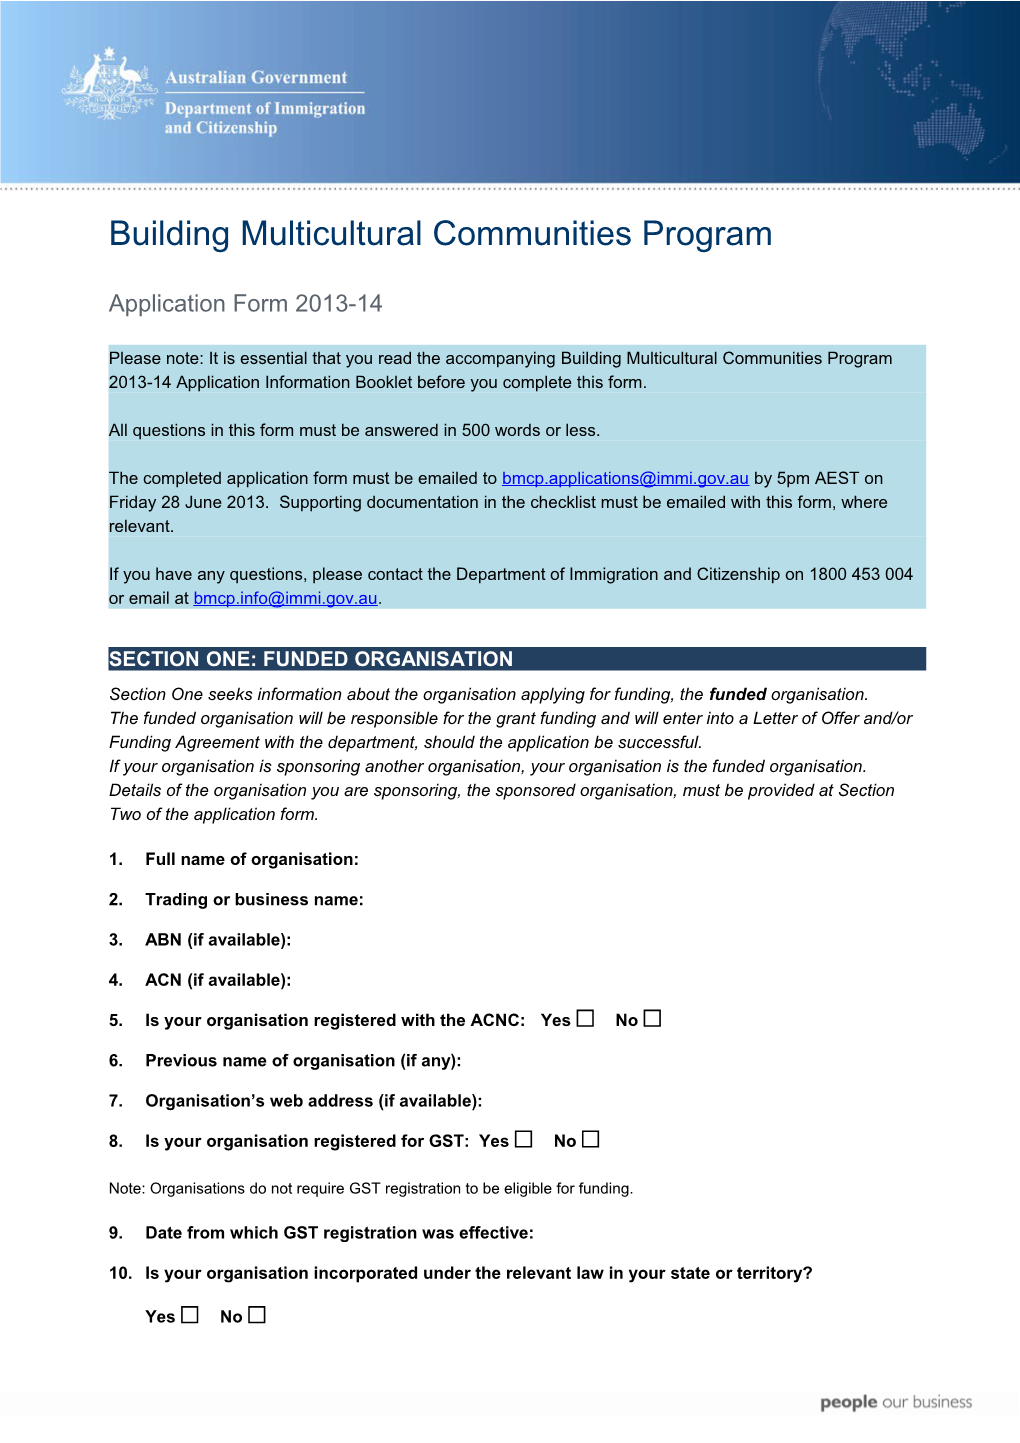 Building Multicultural Communities Program (BMCP)